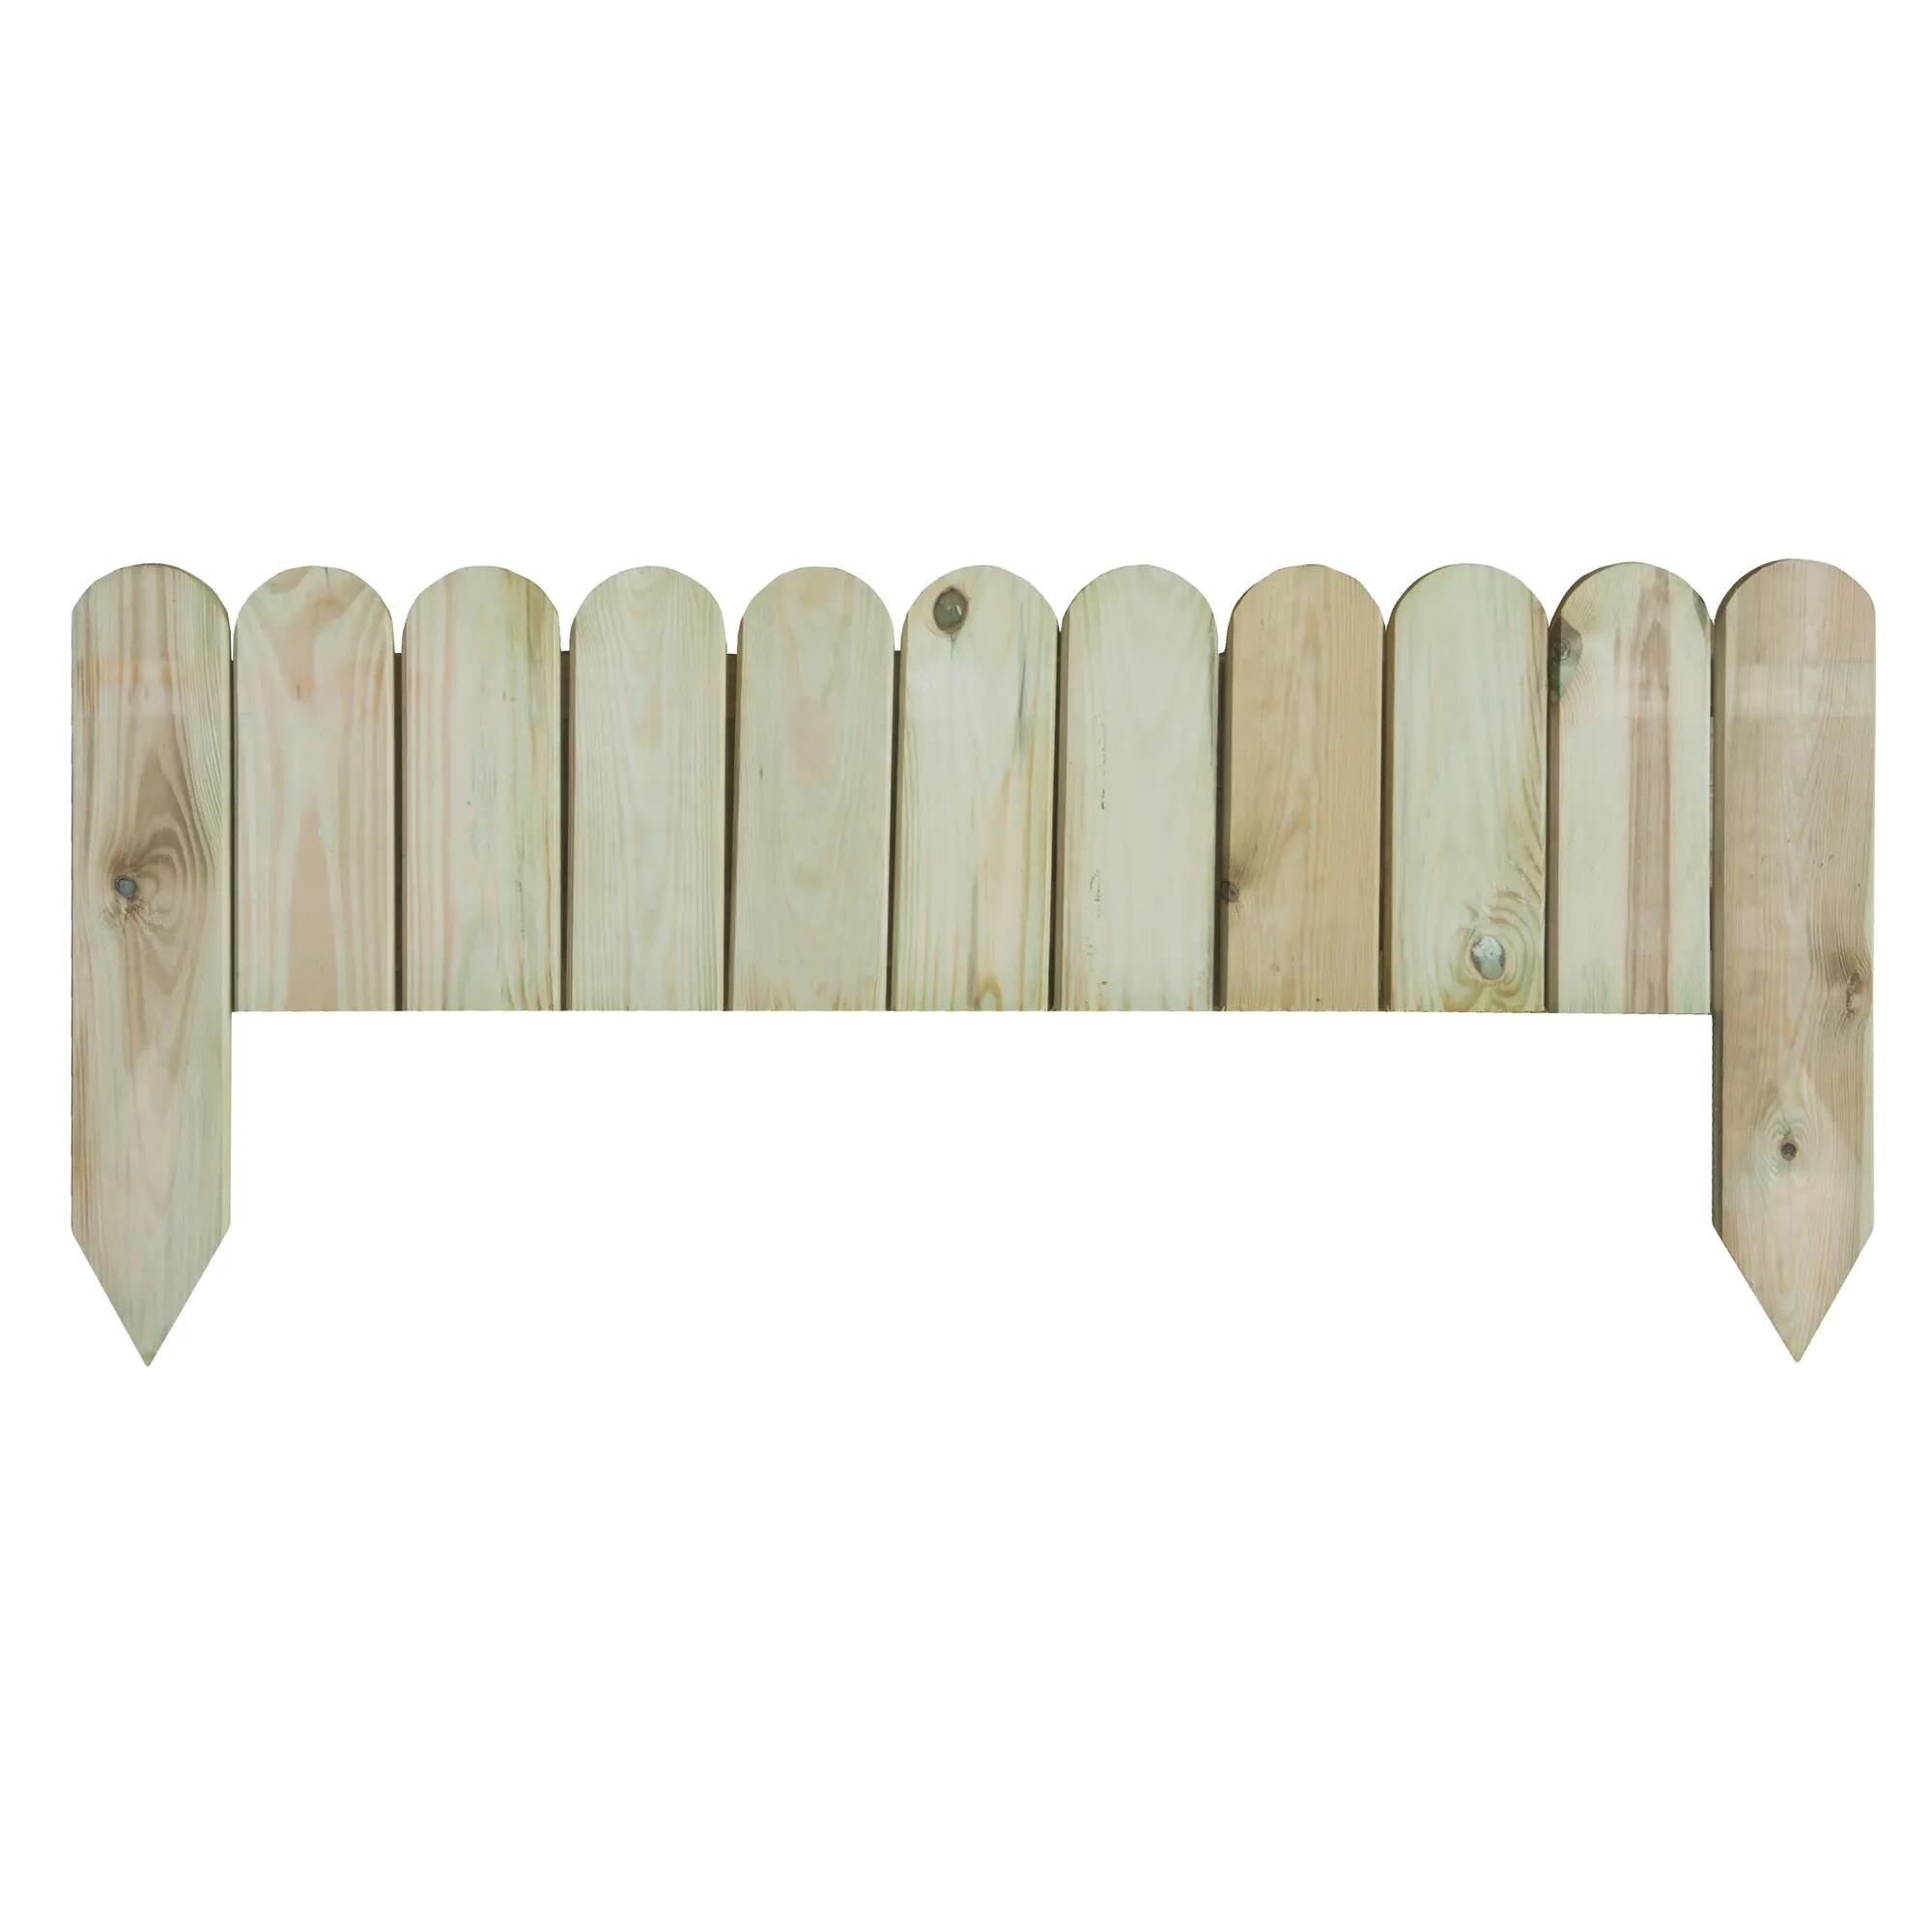 Bordura nikko para plantar de madera 25/45x100 cm